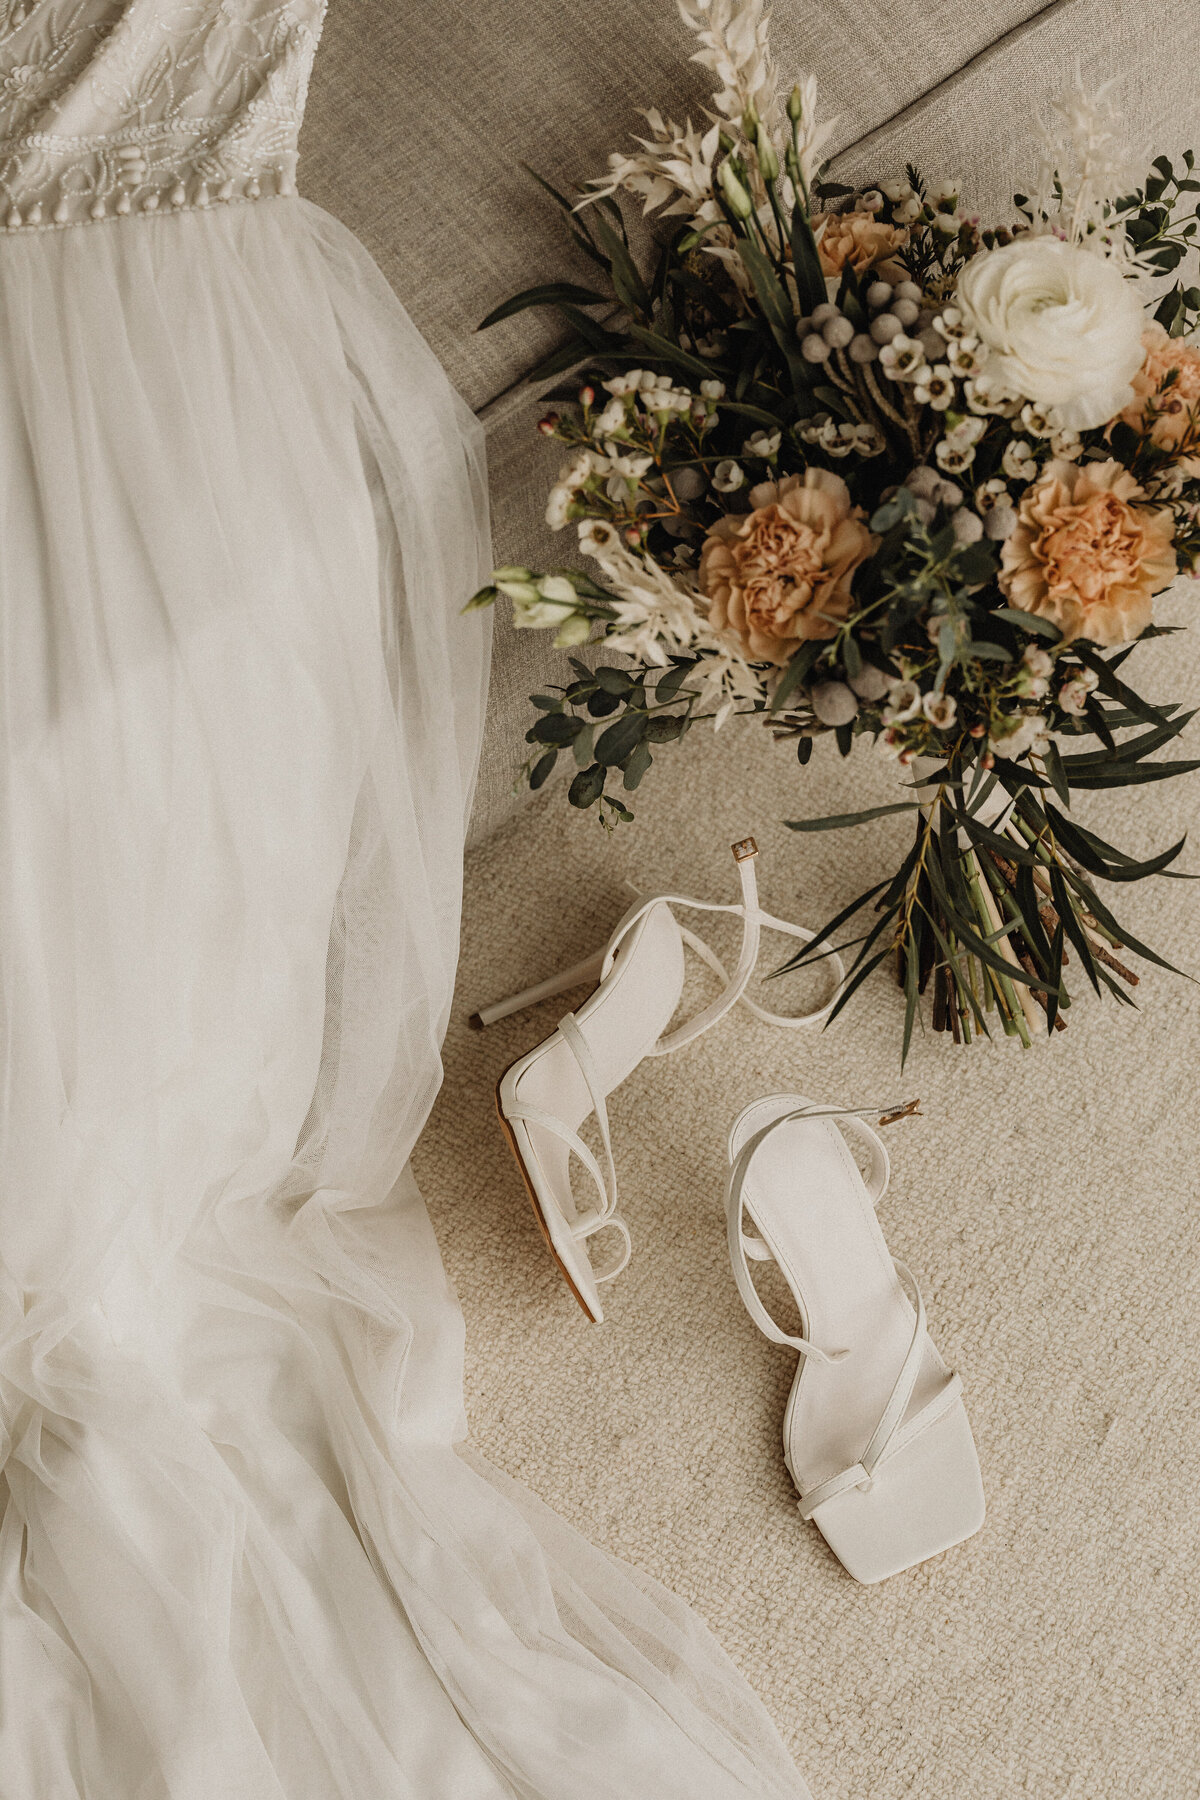 kaboompics_wedding-dress-shoes-bouquet-31914